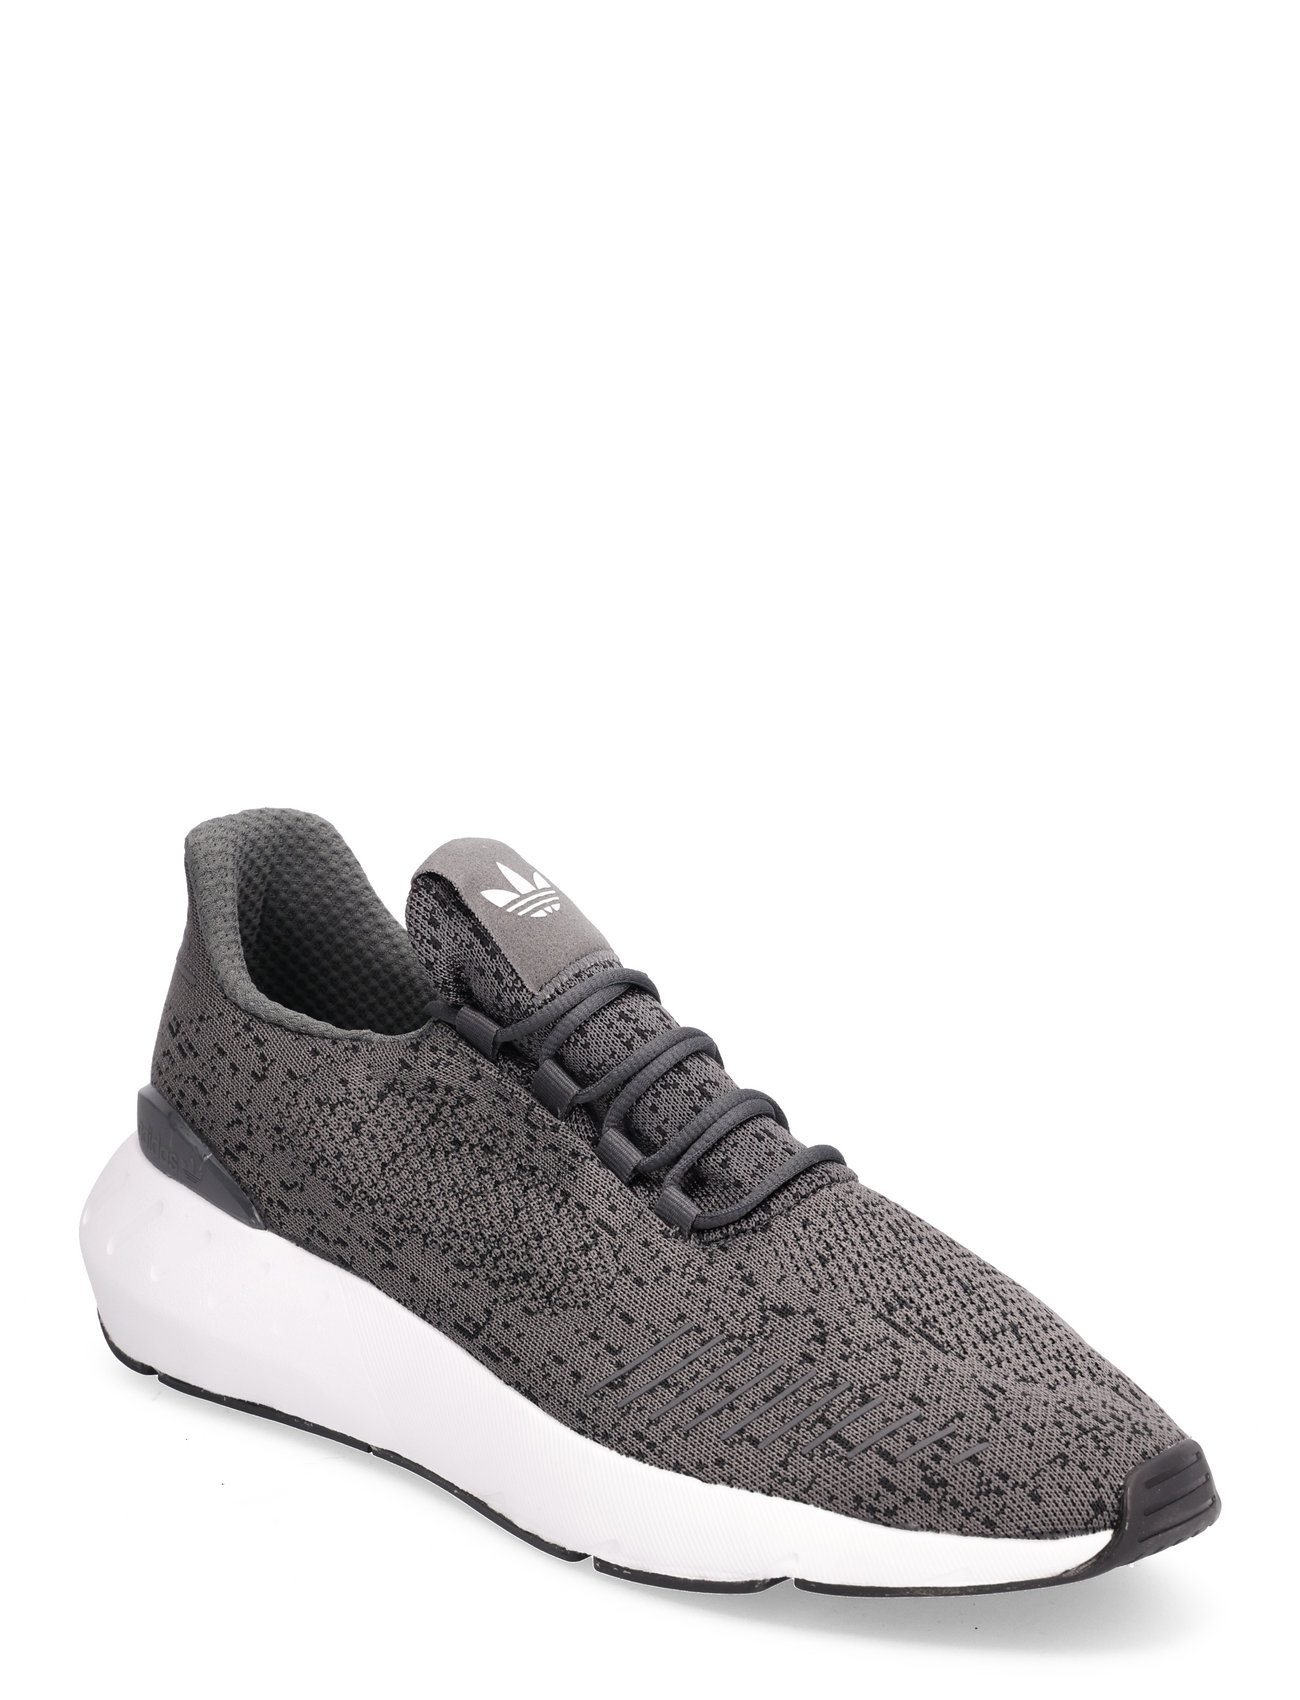 Swift Run 22 Shoes Low-top Sneakers Grey Adidas Originals